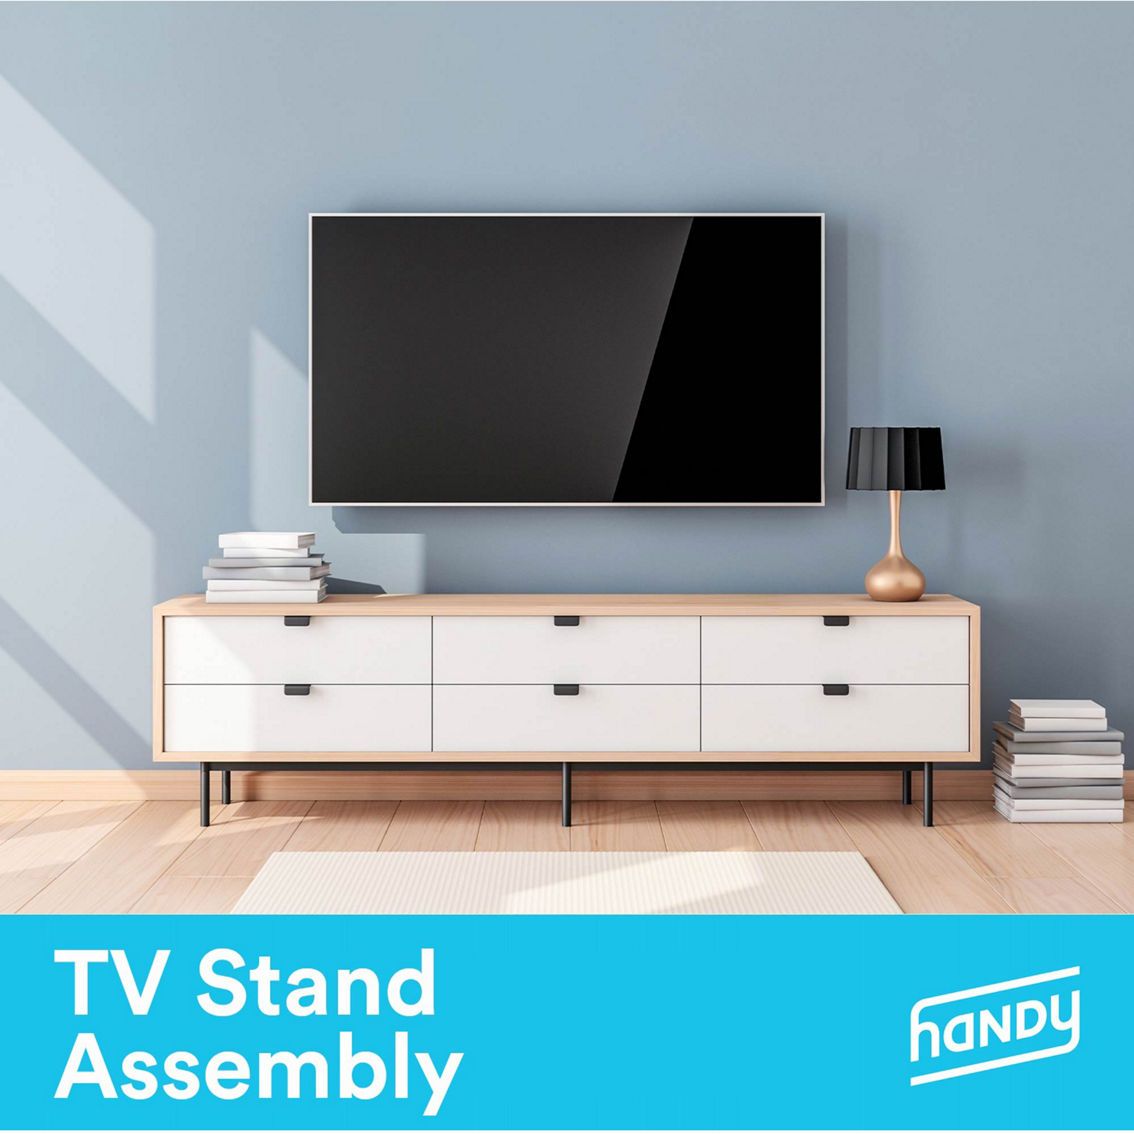 Handy TV Stand Assembly Service